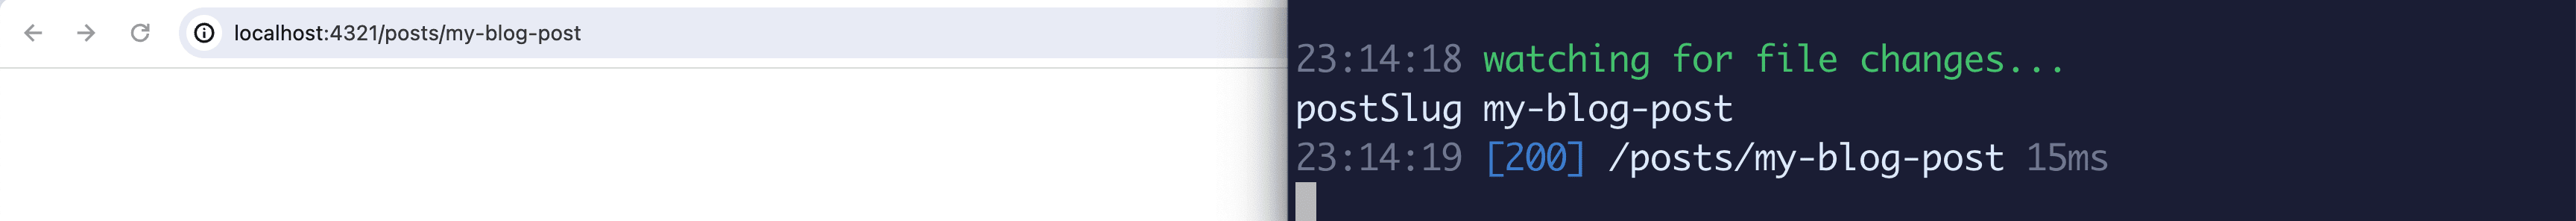 Post slug logged to terminal